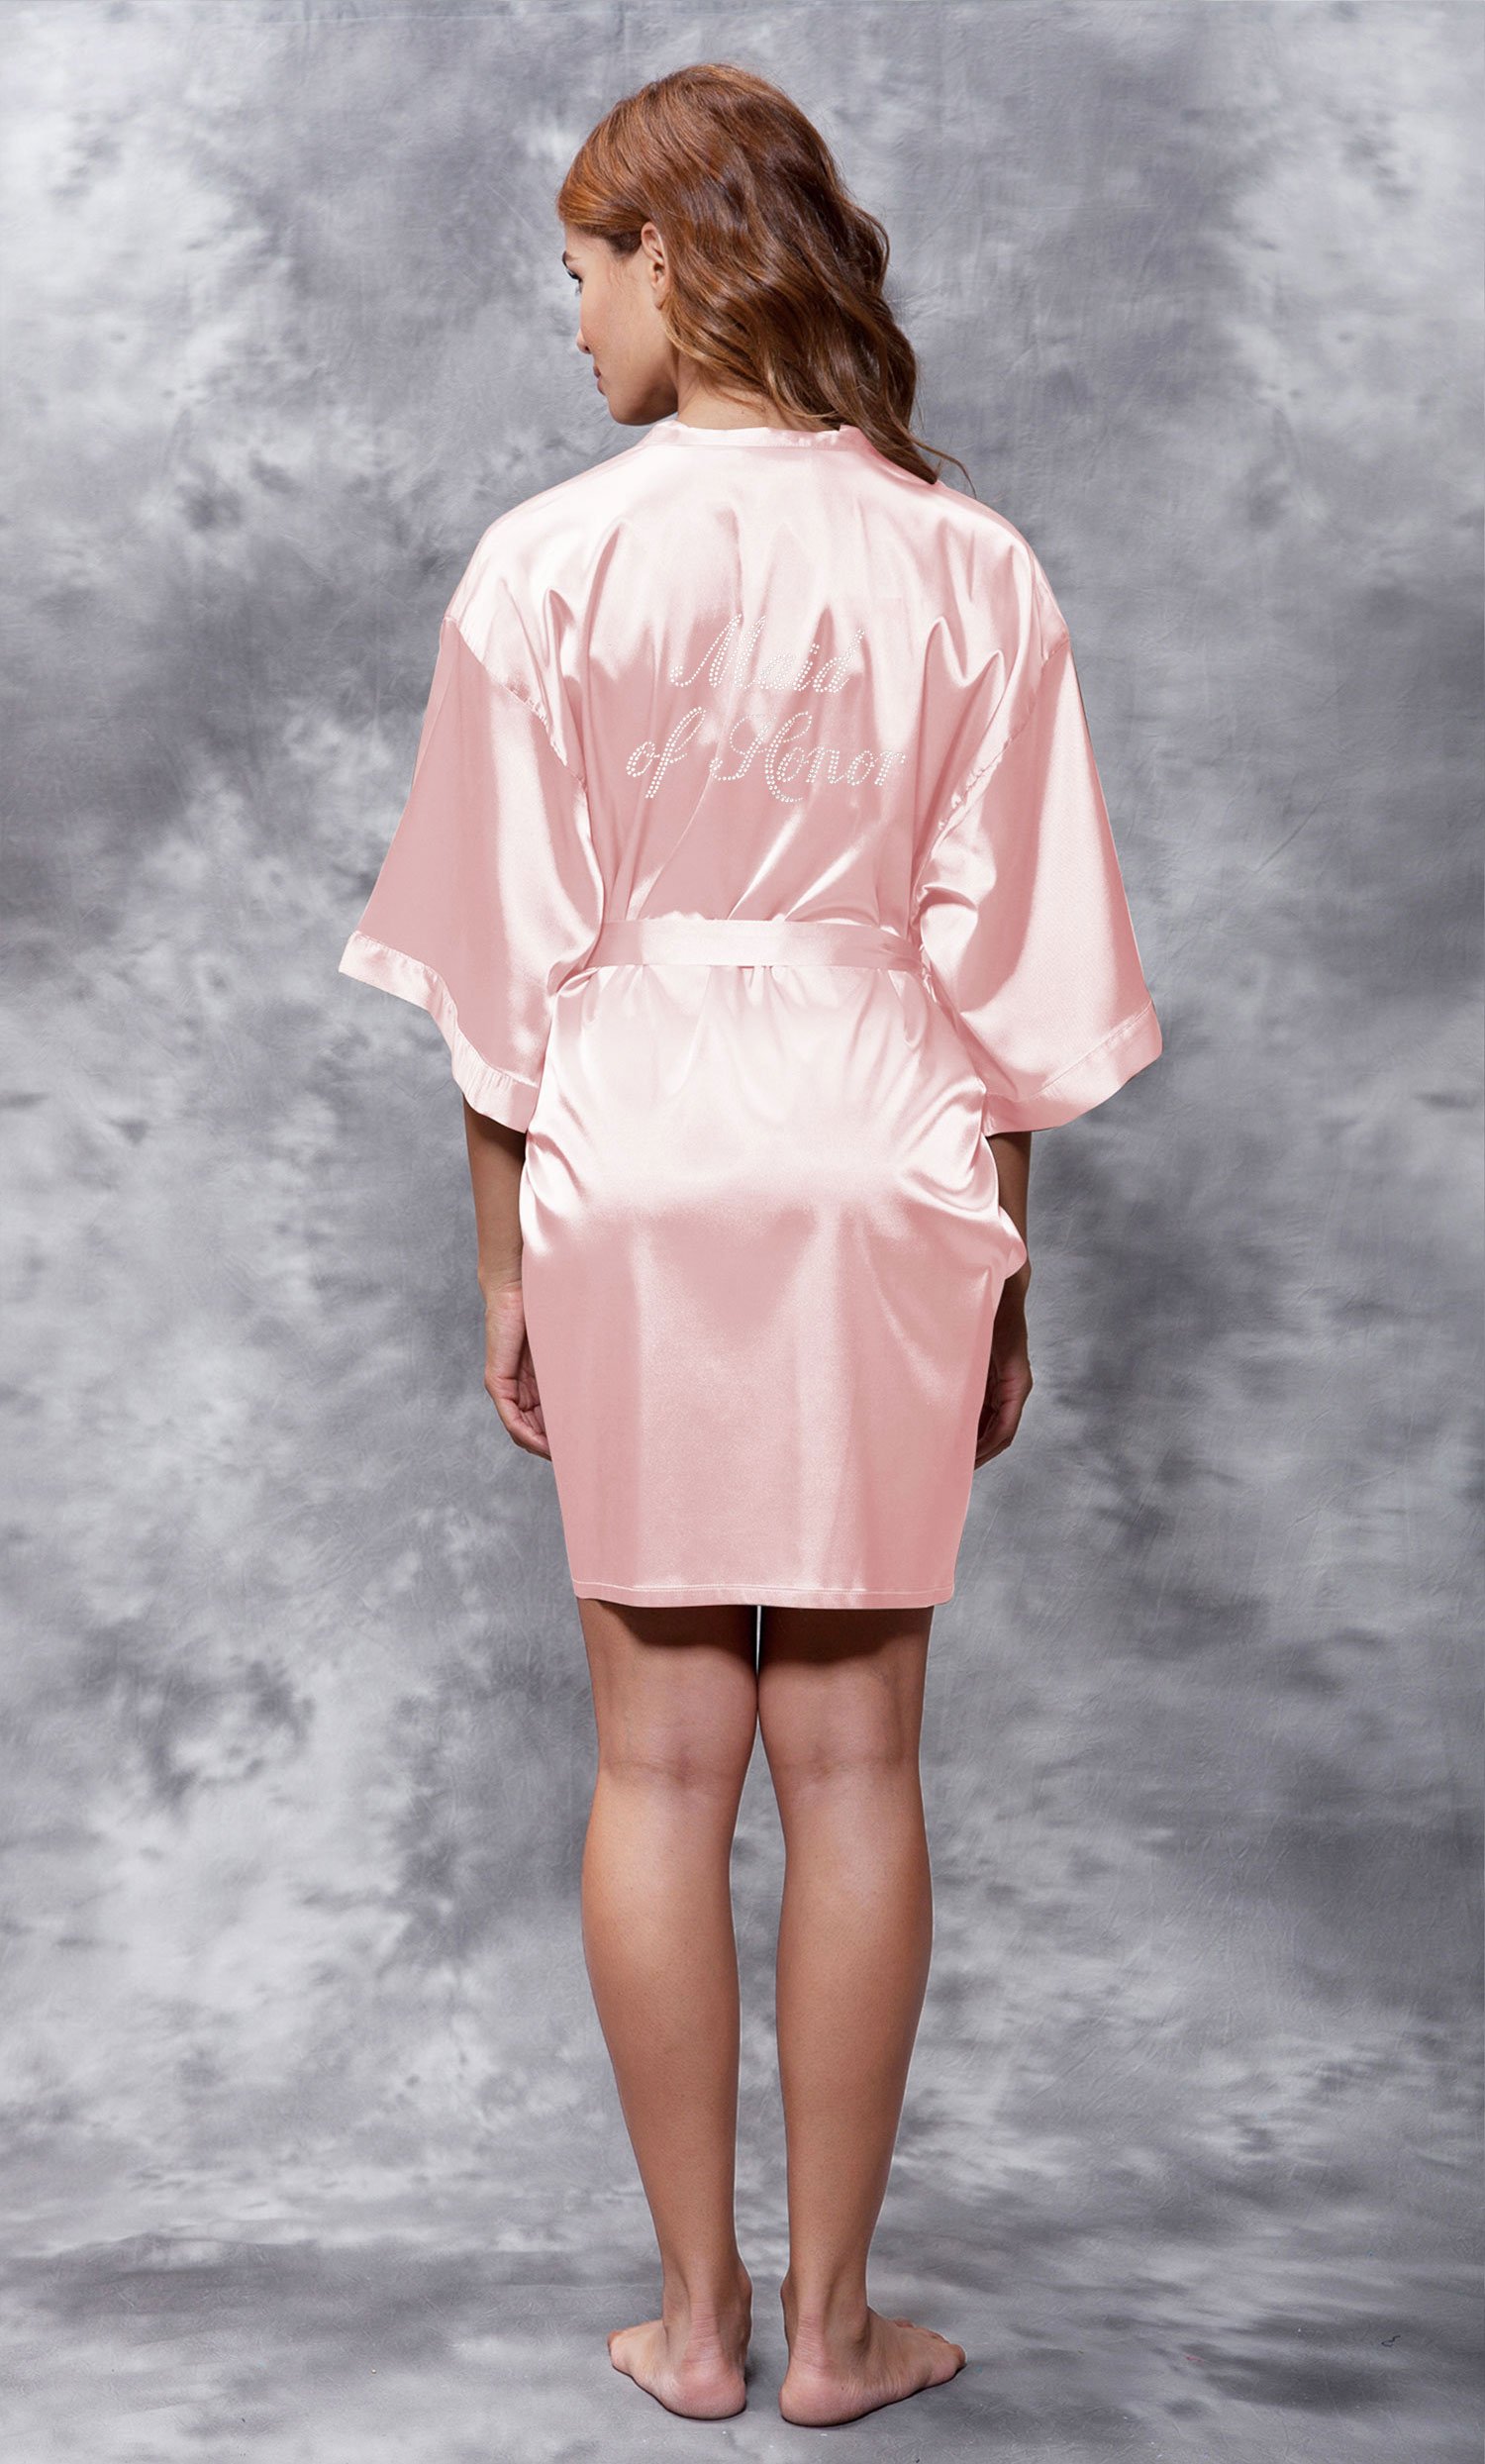 Maid of Honor Clear Rhinestone Satin Kimono Light Pink Peach Short Robe-Robemart.com